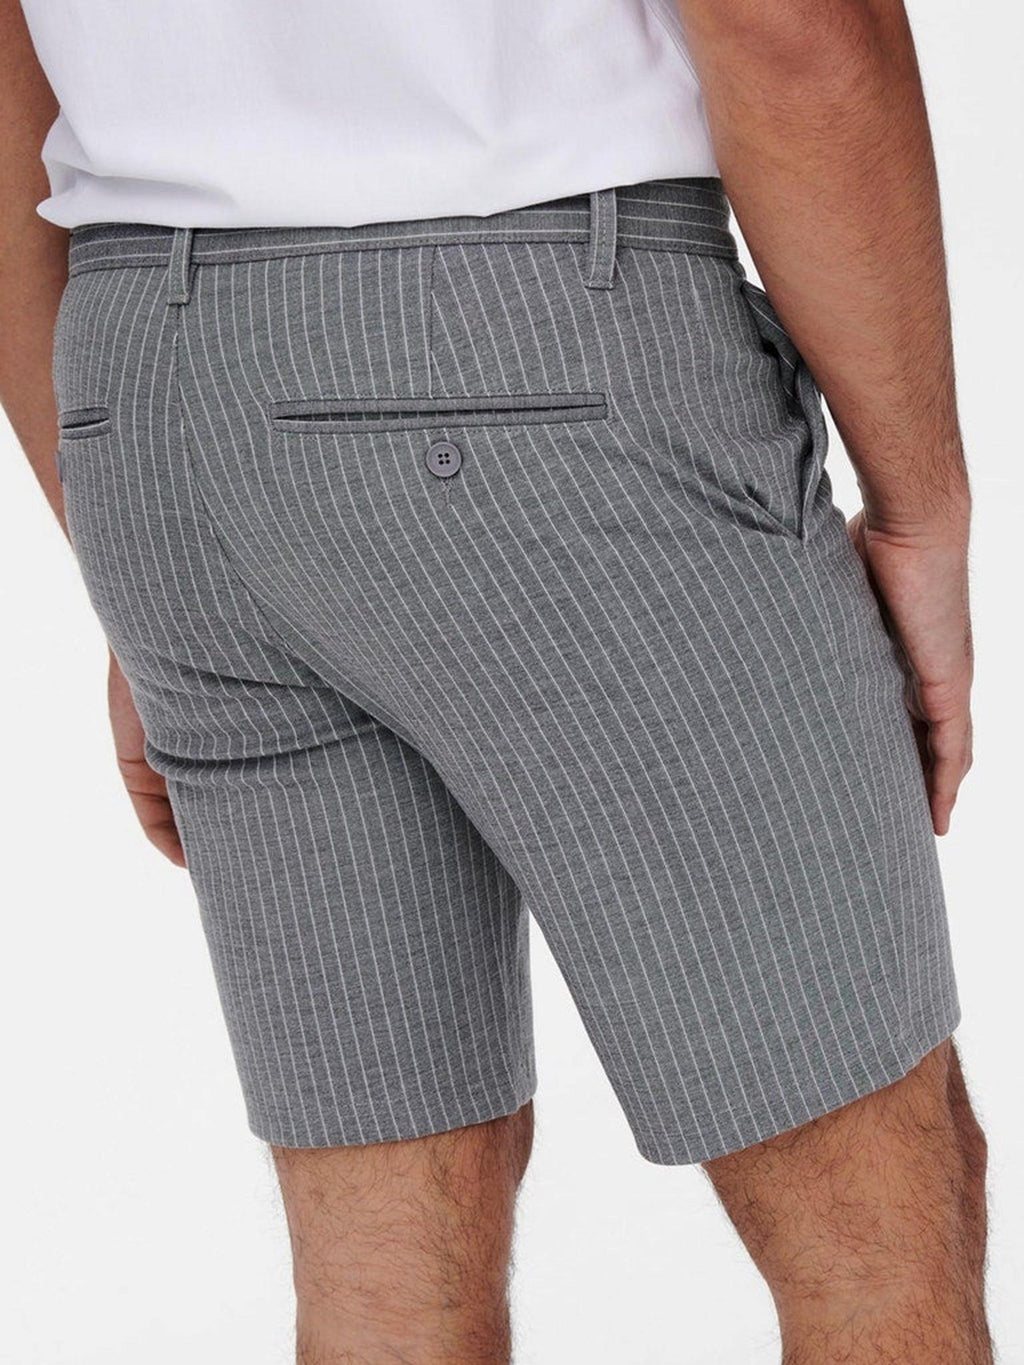 Spota shorts Stripe - Liath éadrom